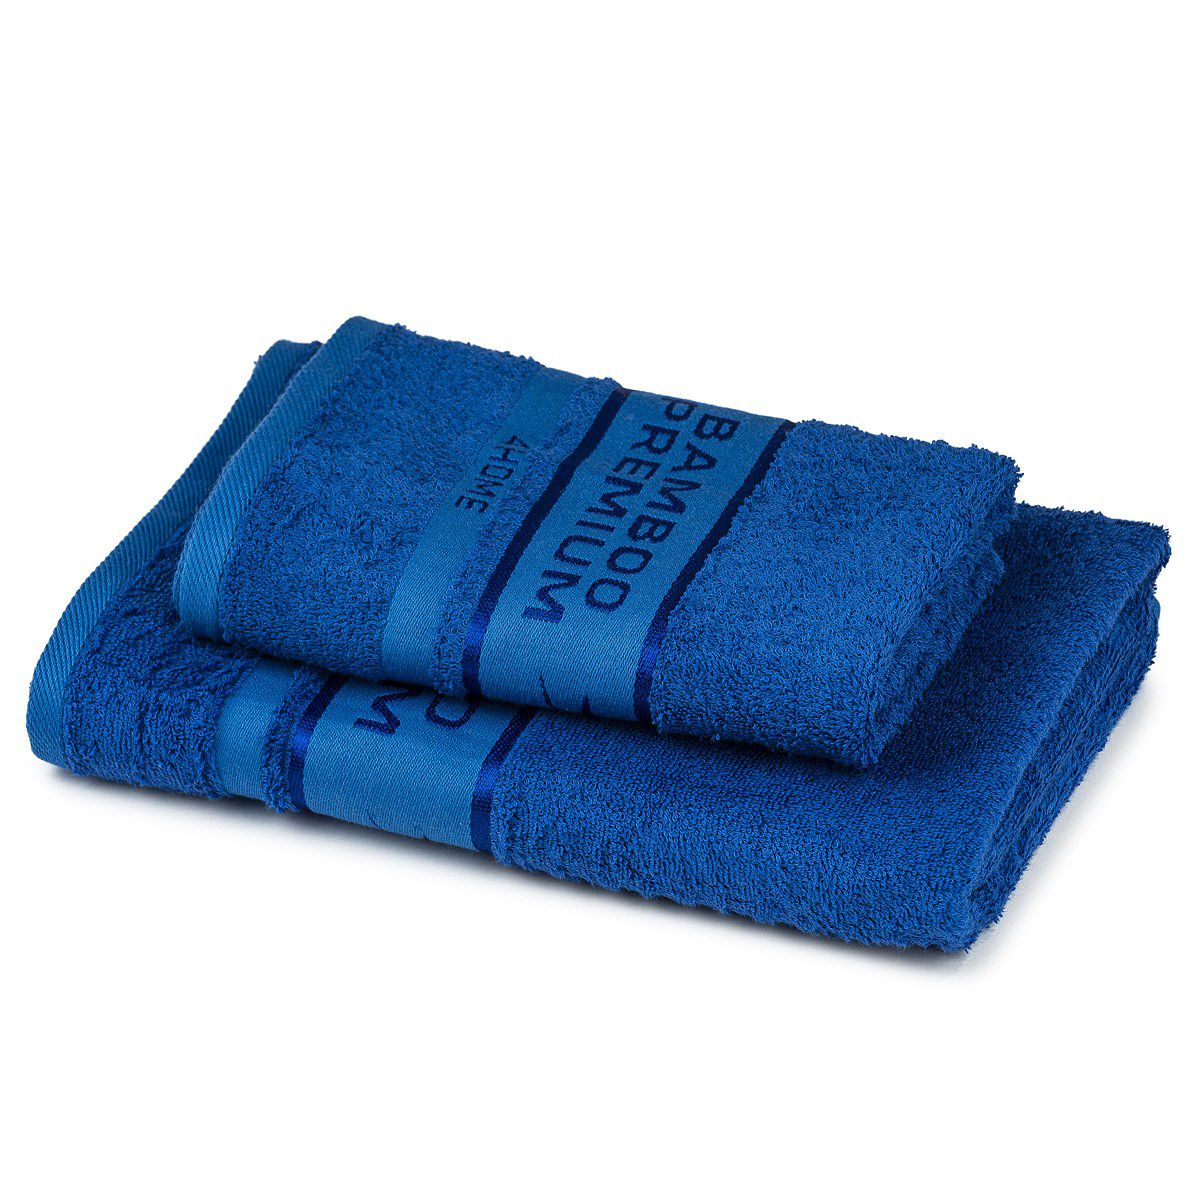 4Home Sada Bamboo Premium osuška a ručník modrá, 70 x 140 cm, 50 x 100 cm - 4home.cz